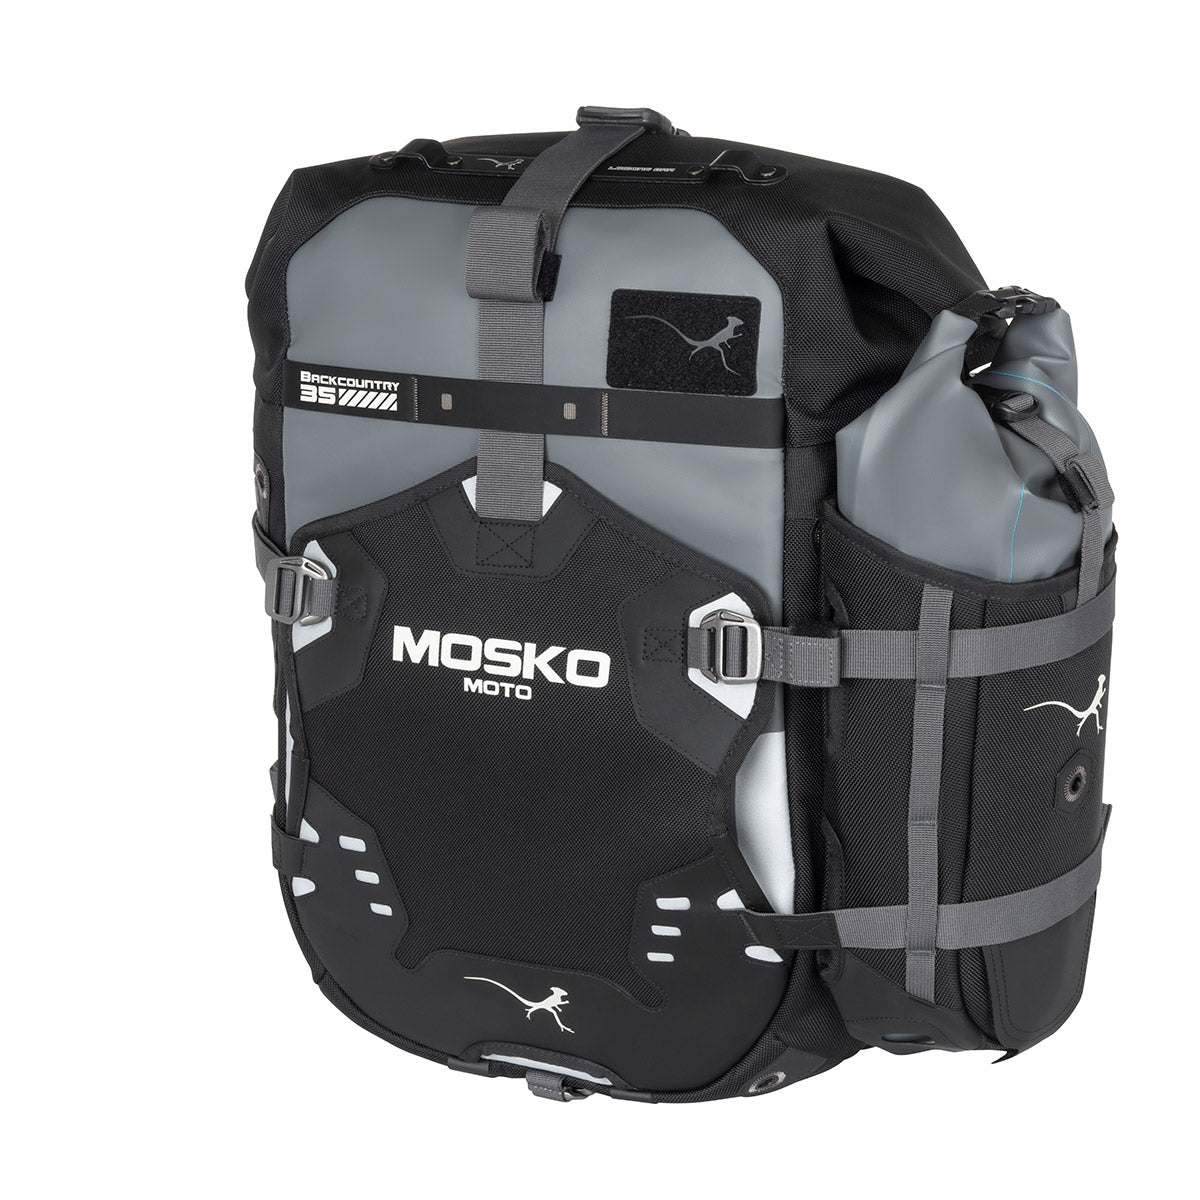 backcountry 35 pannier kit black mosko moto one aux pox 1200x1200px 70